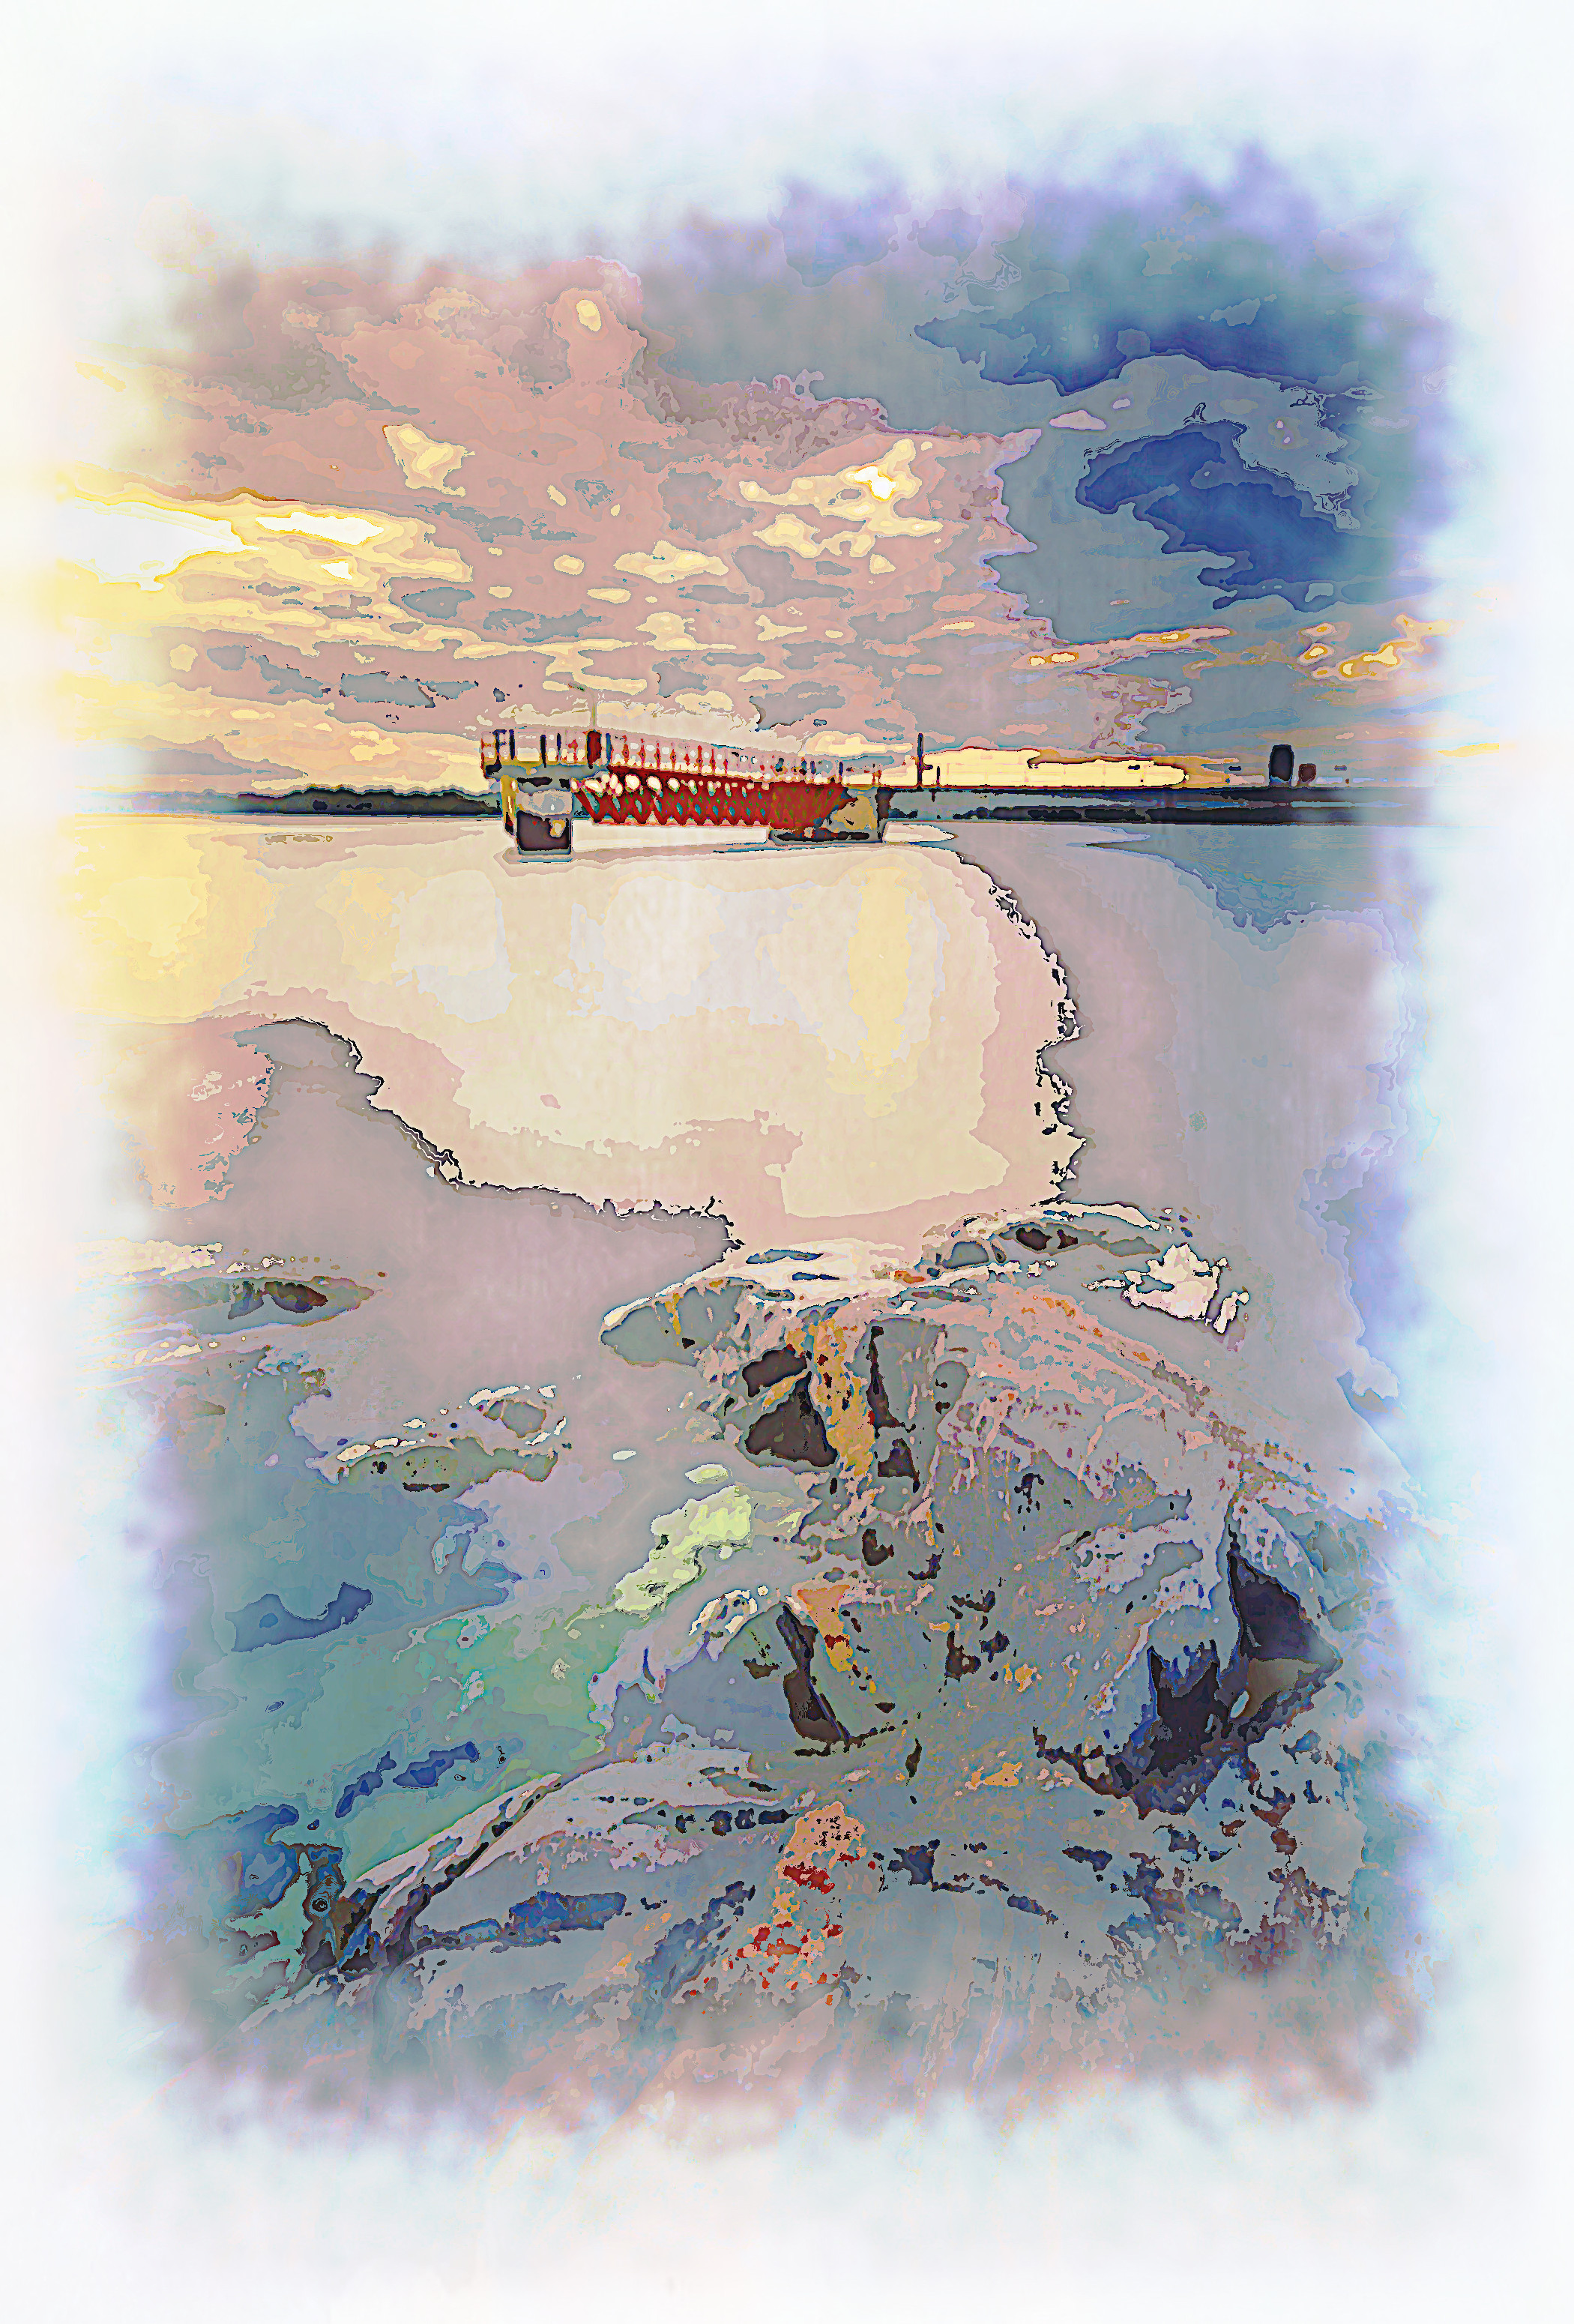 2020-05-11 12-28-21 joakim-honkasalo-LBv91LGa7D4-unsplash as a digital aquarel, using18 colours, source seascape, look colour contrast plus.jpg